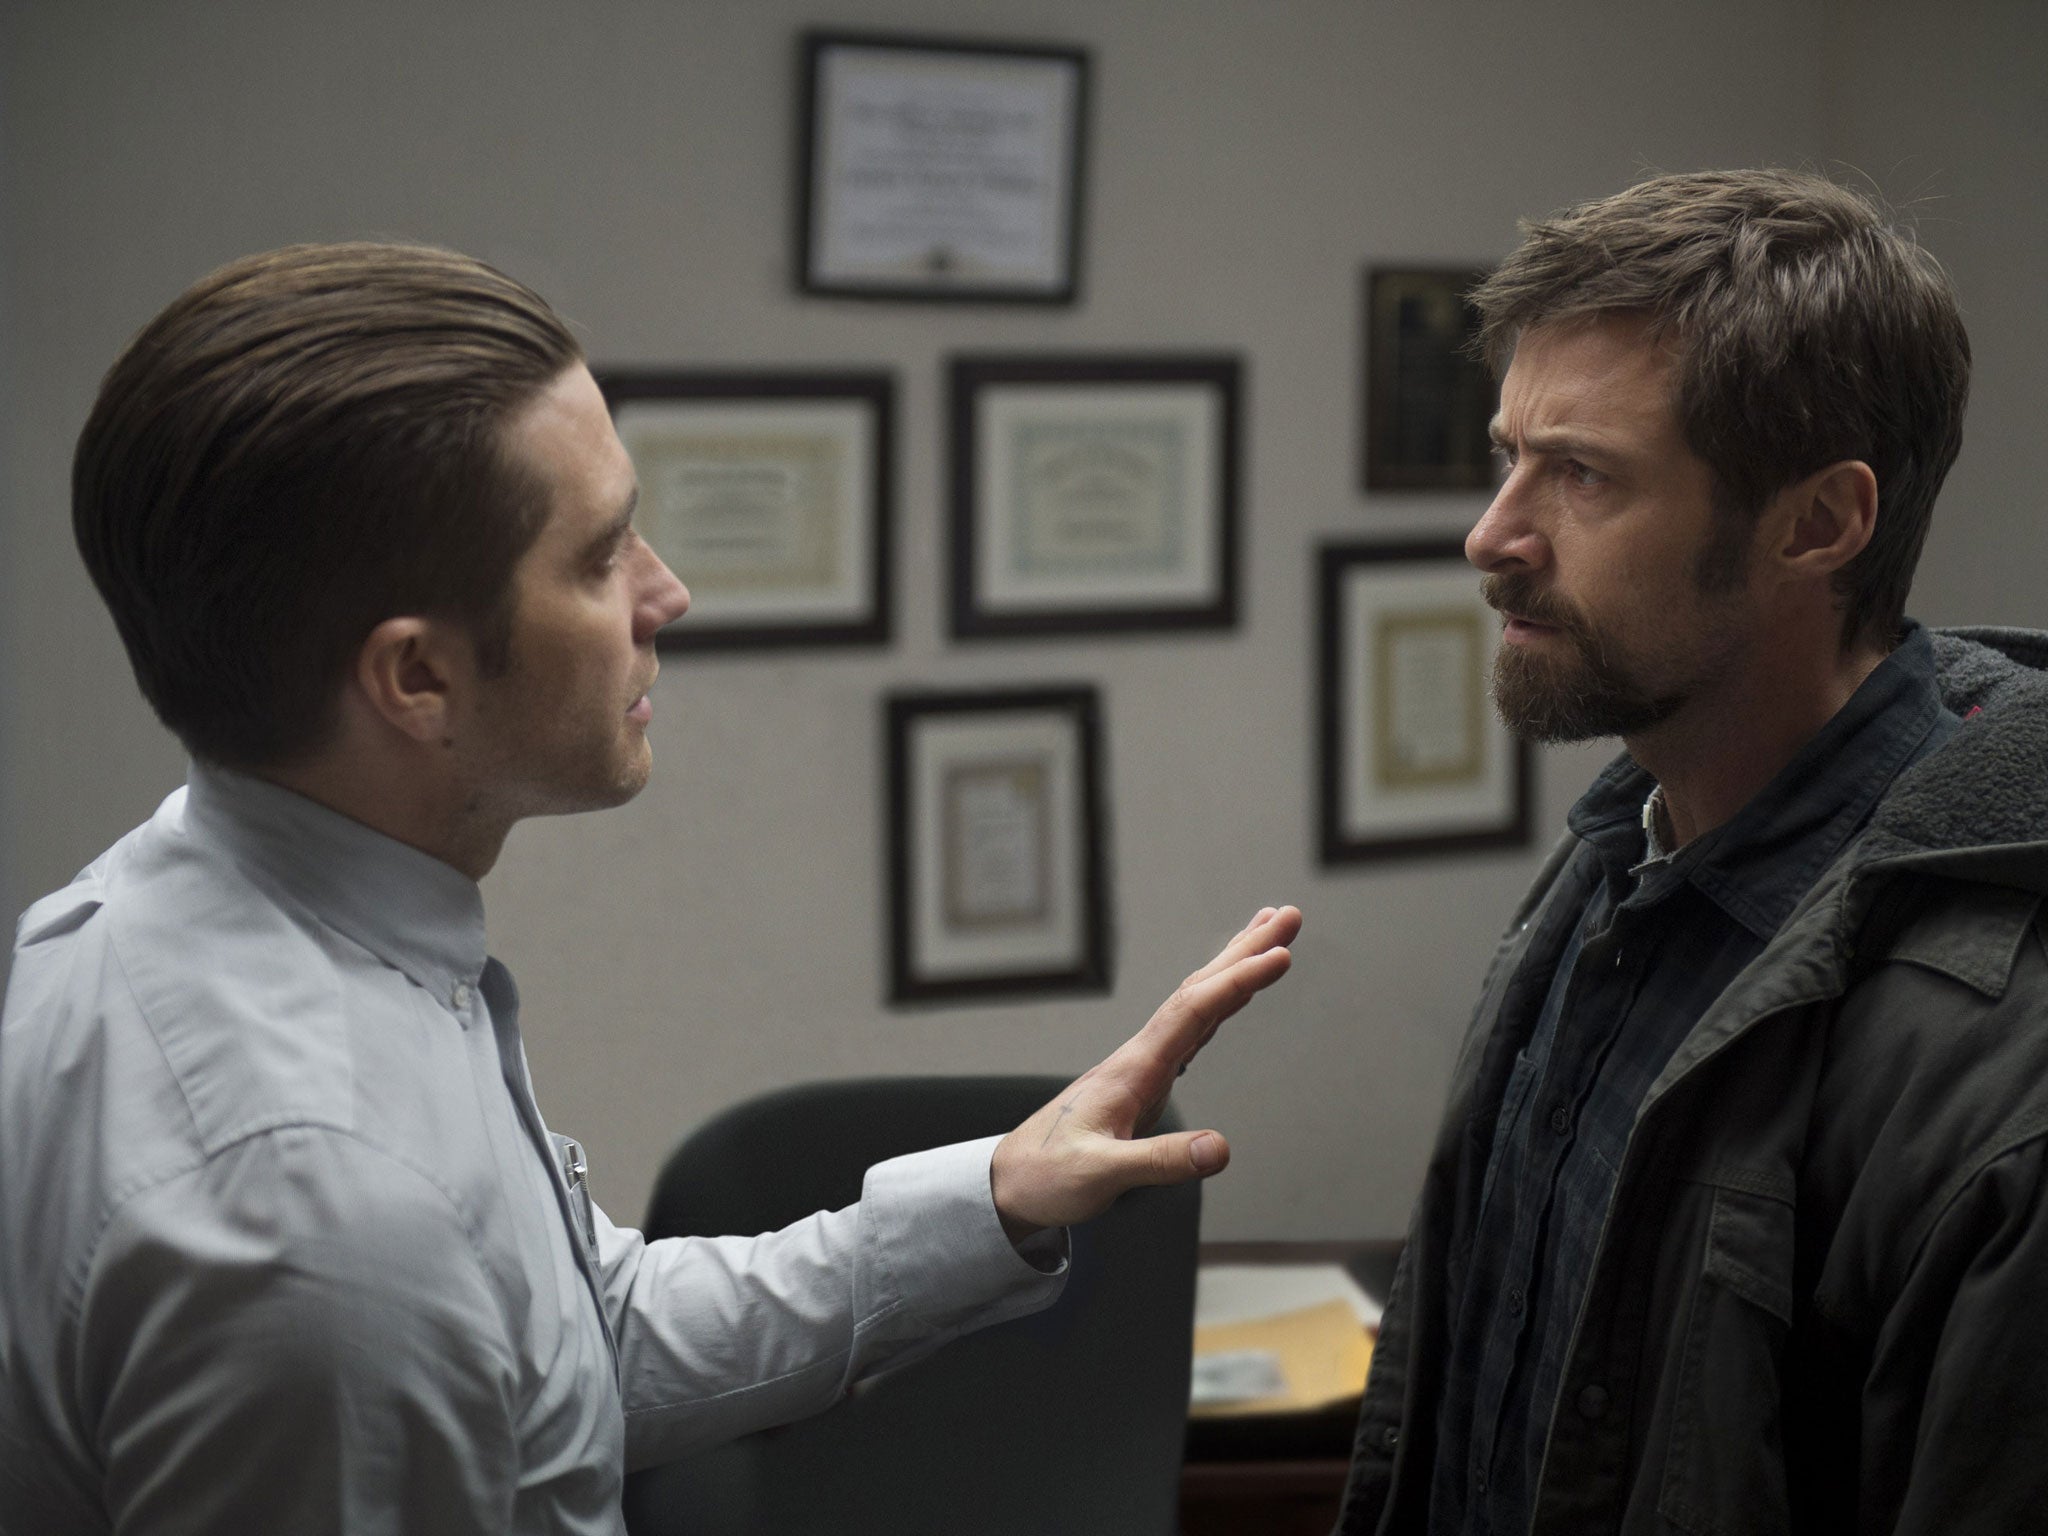 Donnier darker: Jake Gyllenhaal and Hugh Jackman in 'Prisoners'